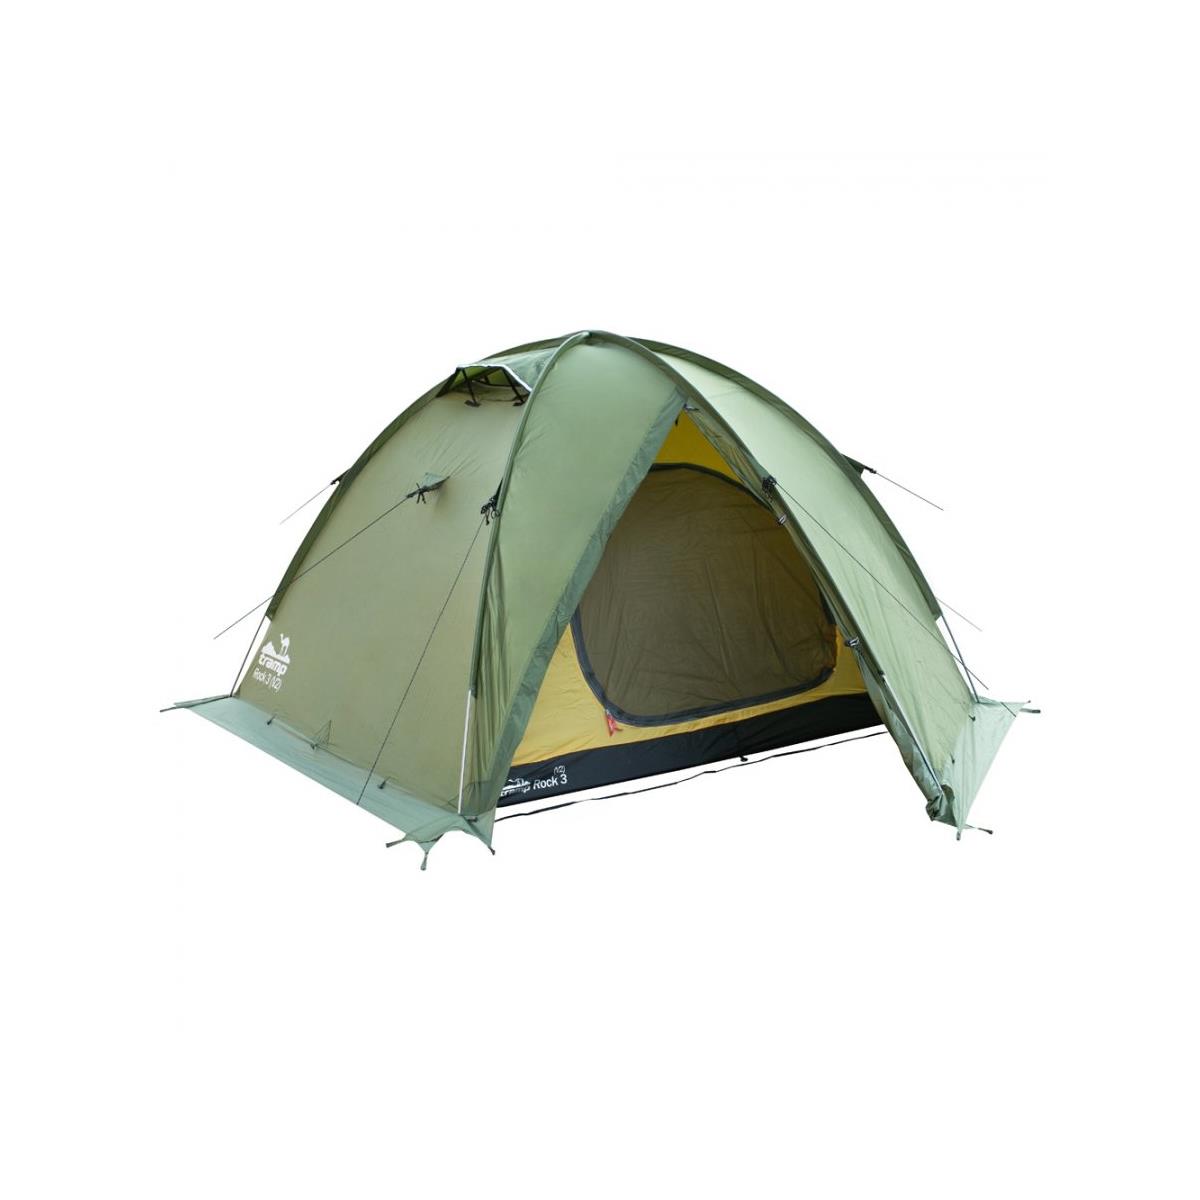 Трехместная палатка ROCK 3 V2 зеленый (TRT-28) Tramp трехместная палатка rock 3 v2 зеленый trt 28 tramp